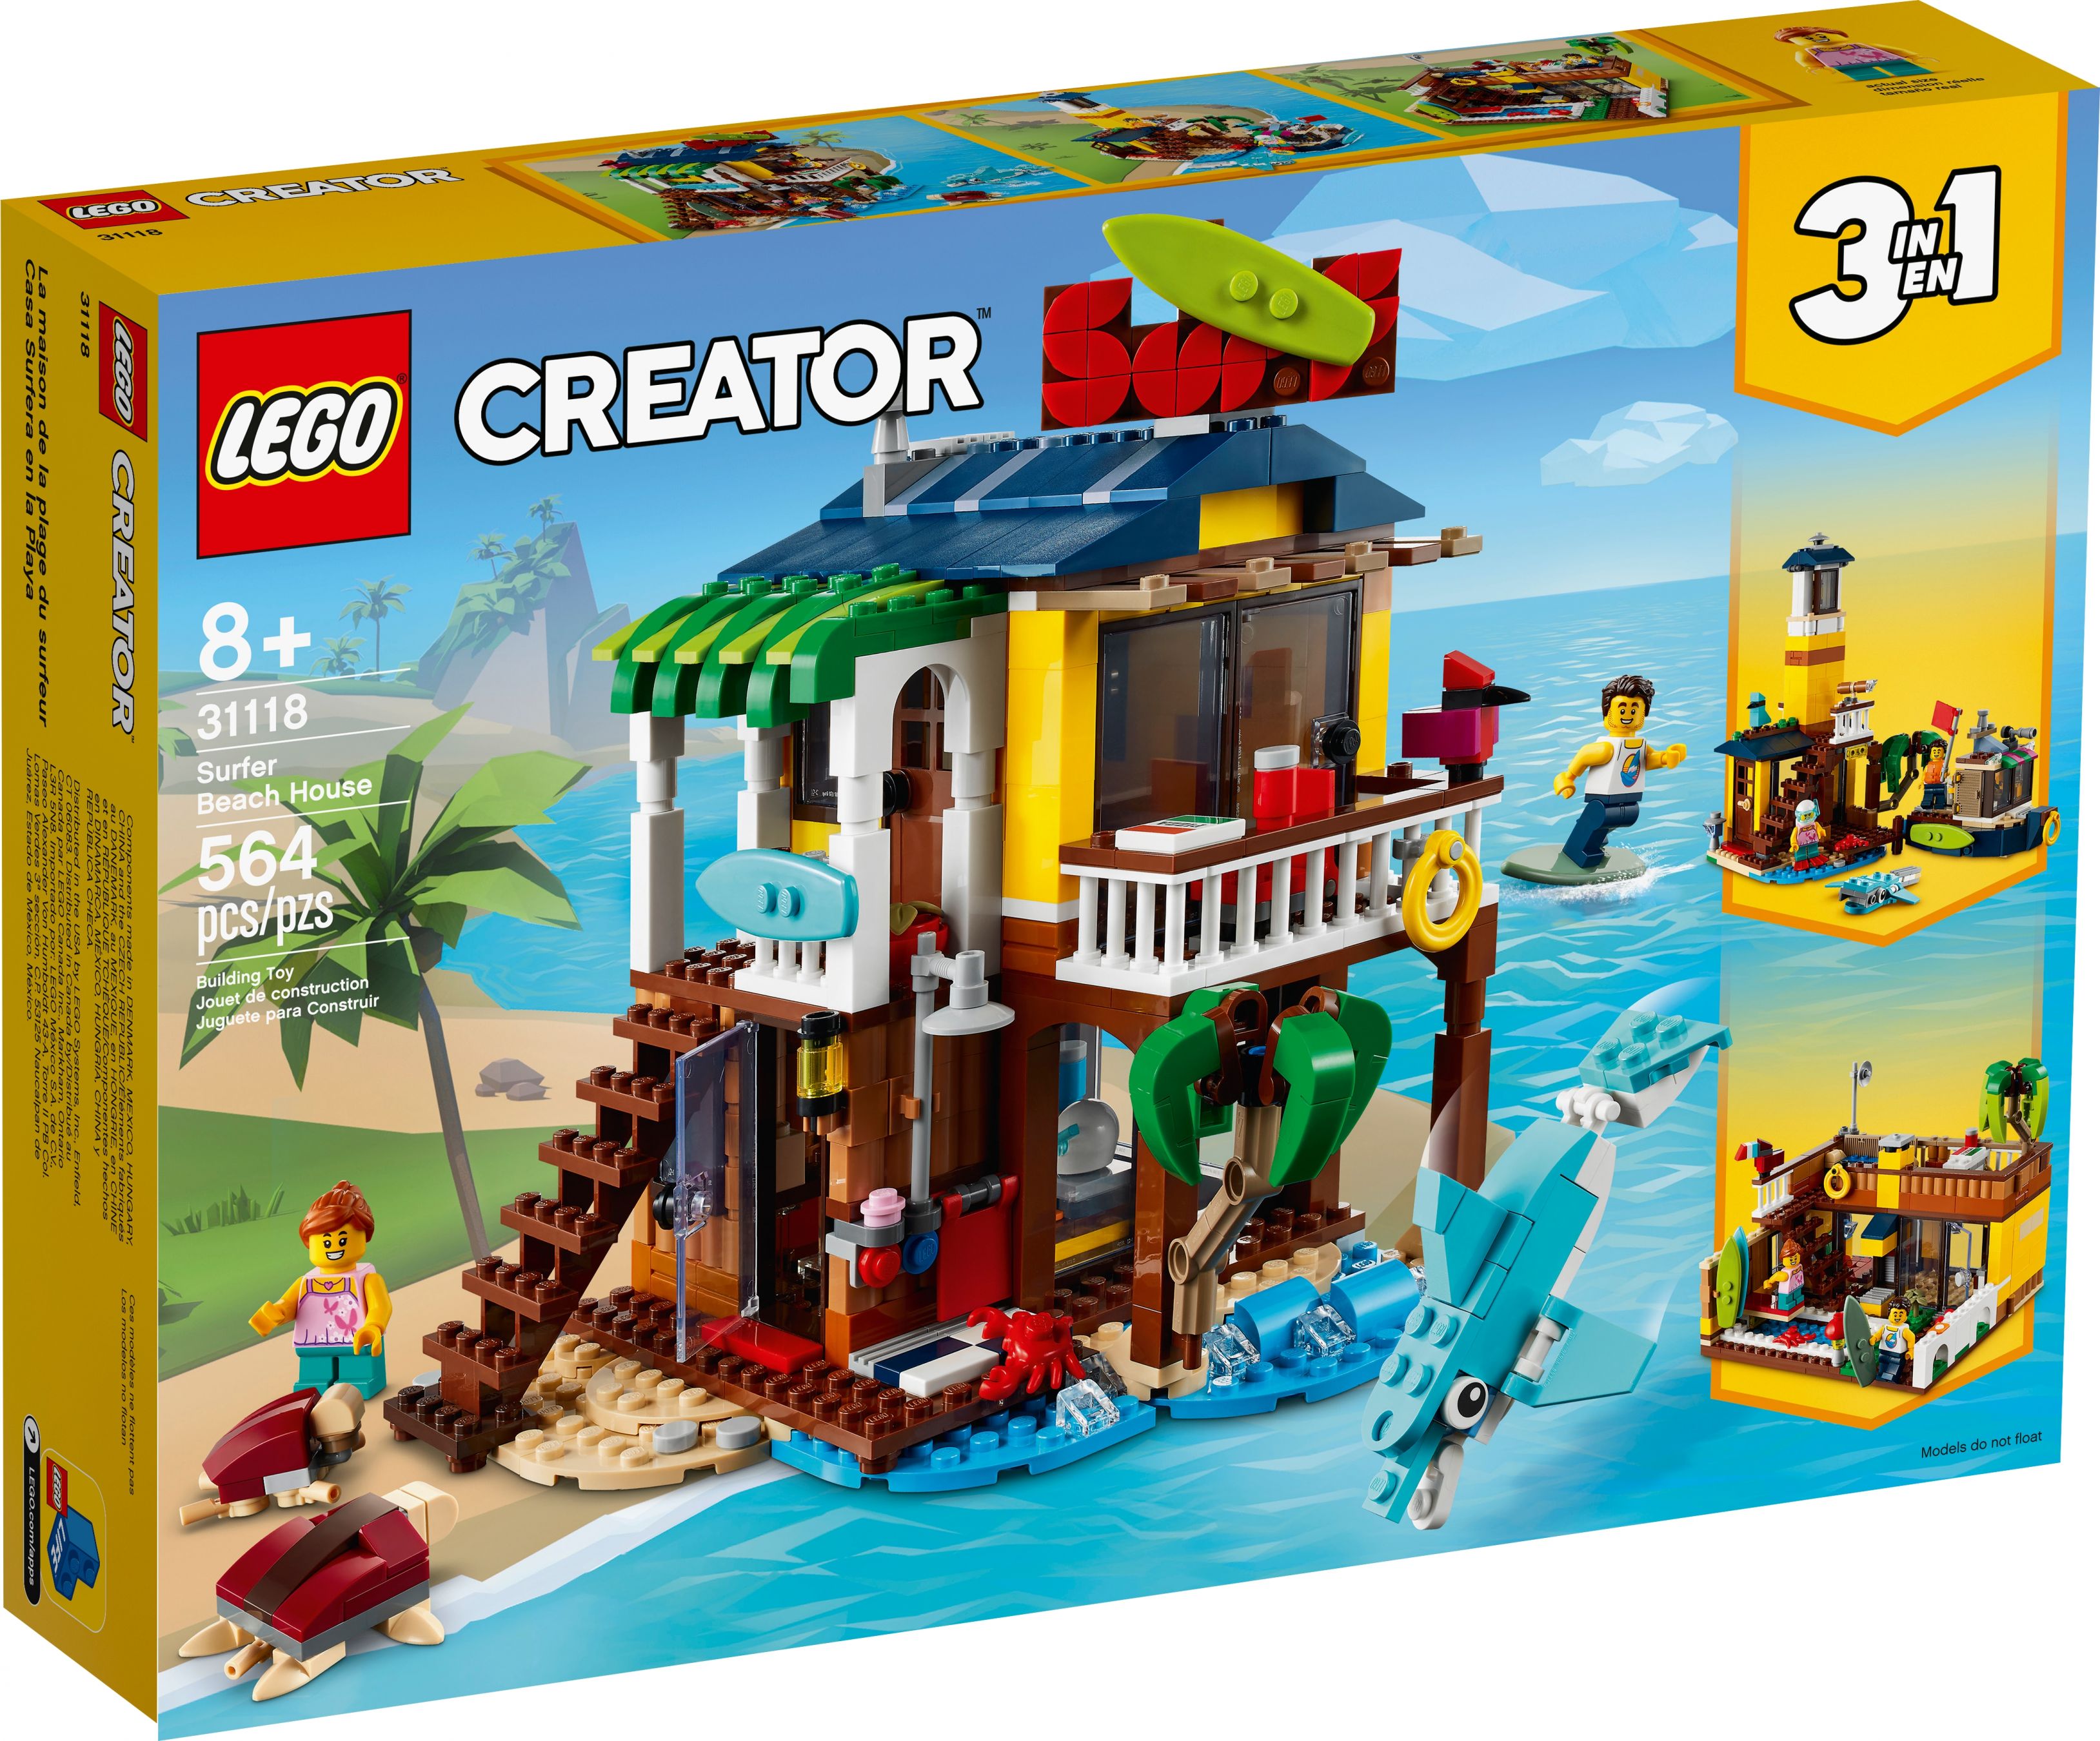 LEGO Creator 31118 Surfer-Strandhaus LEGO_31118_box1_v39.jpg